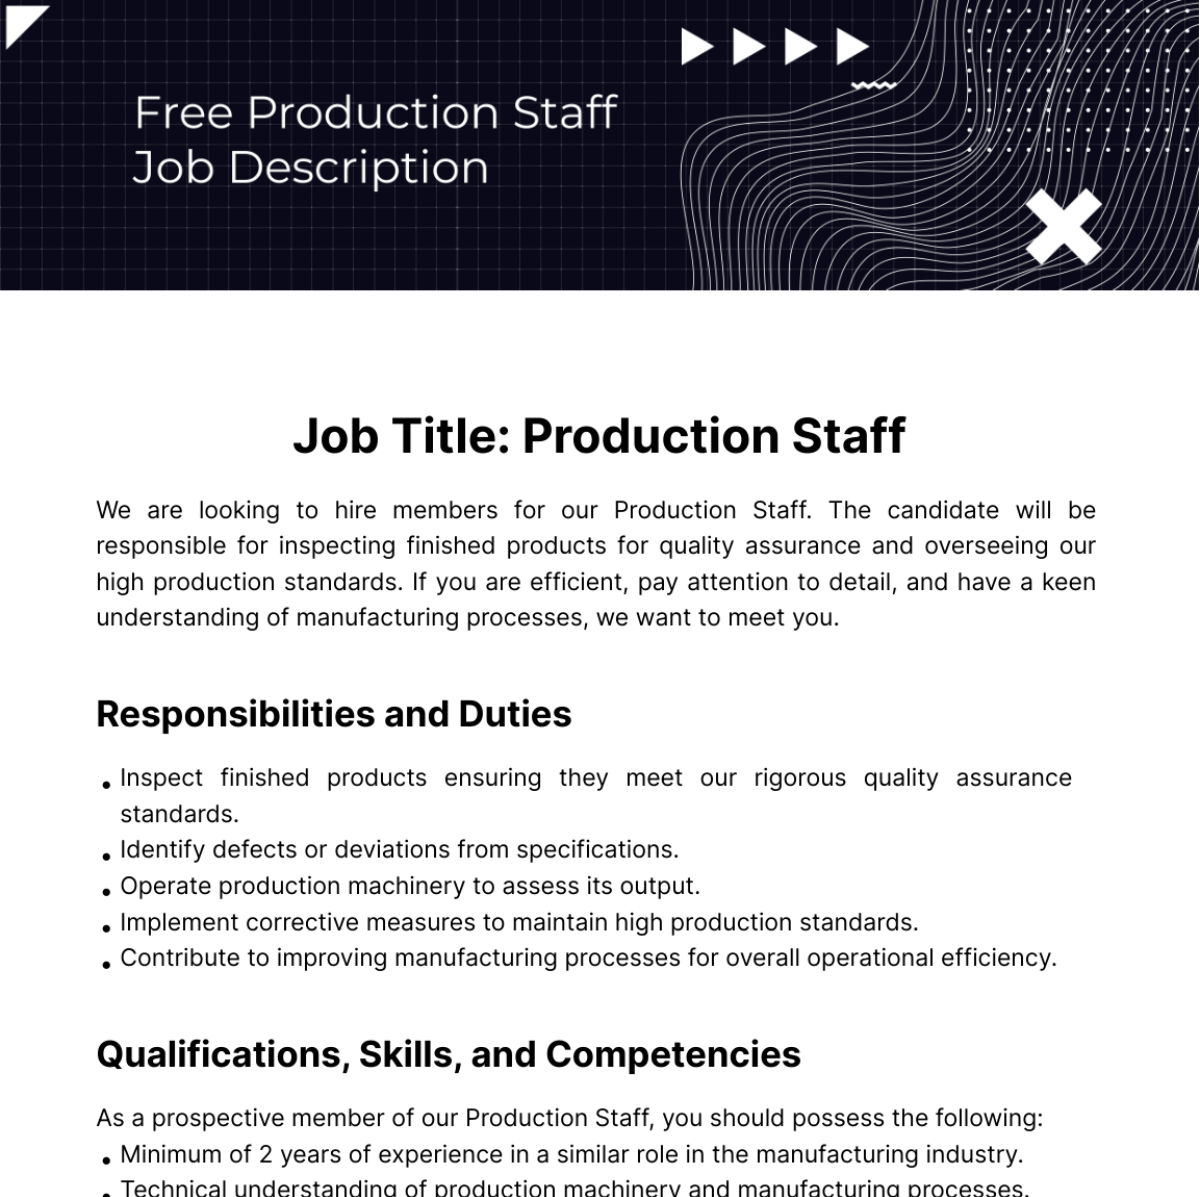 Free Production Staff Job Description Template